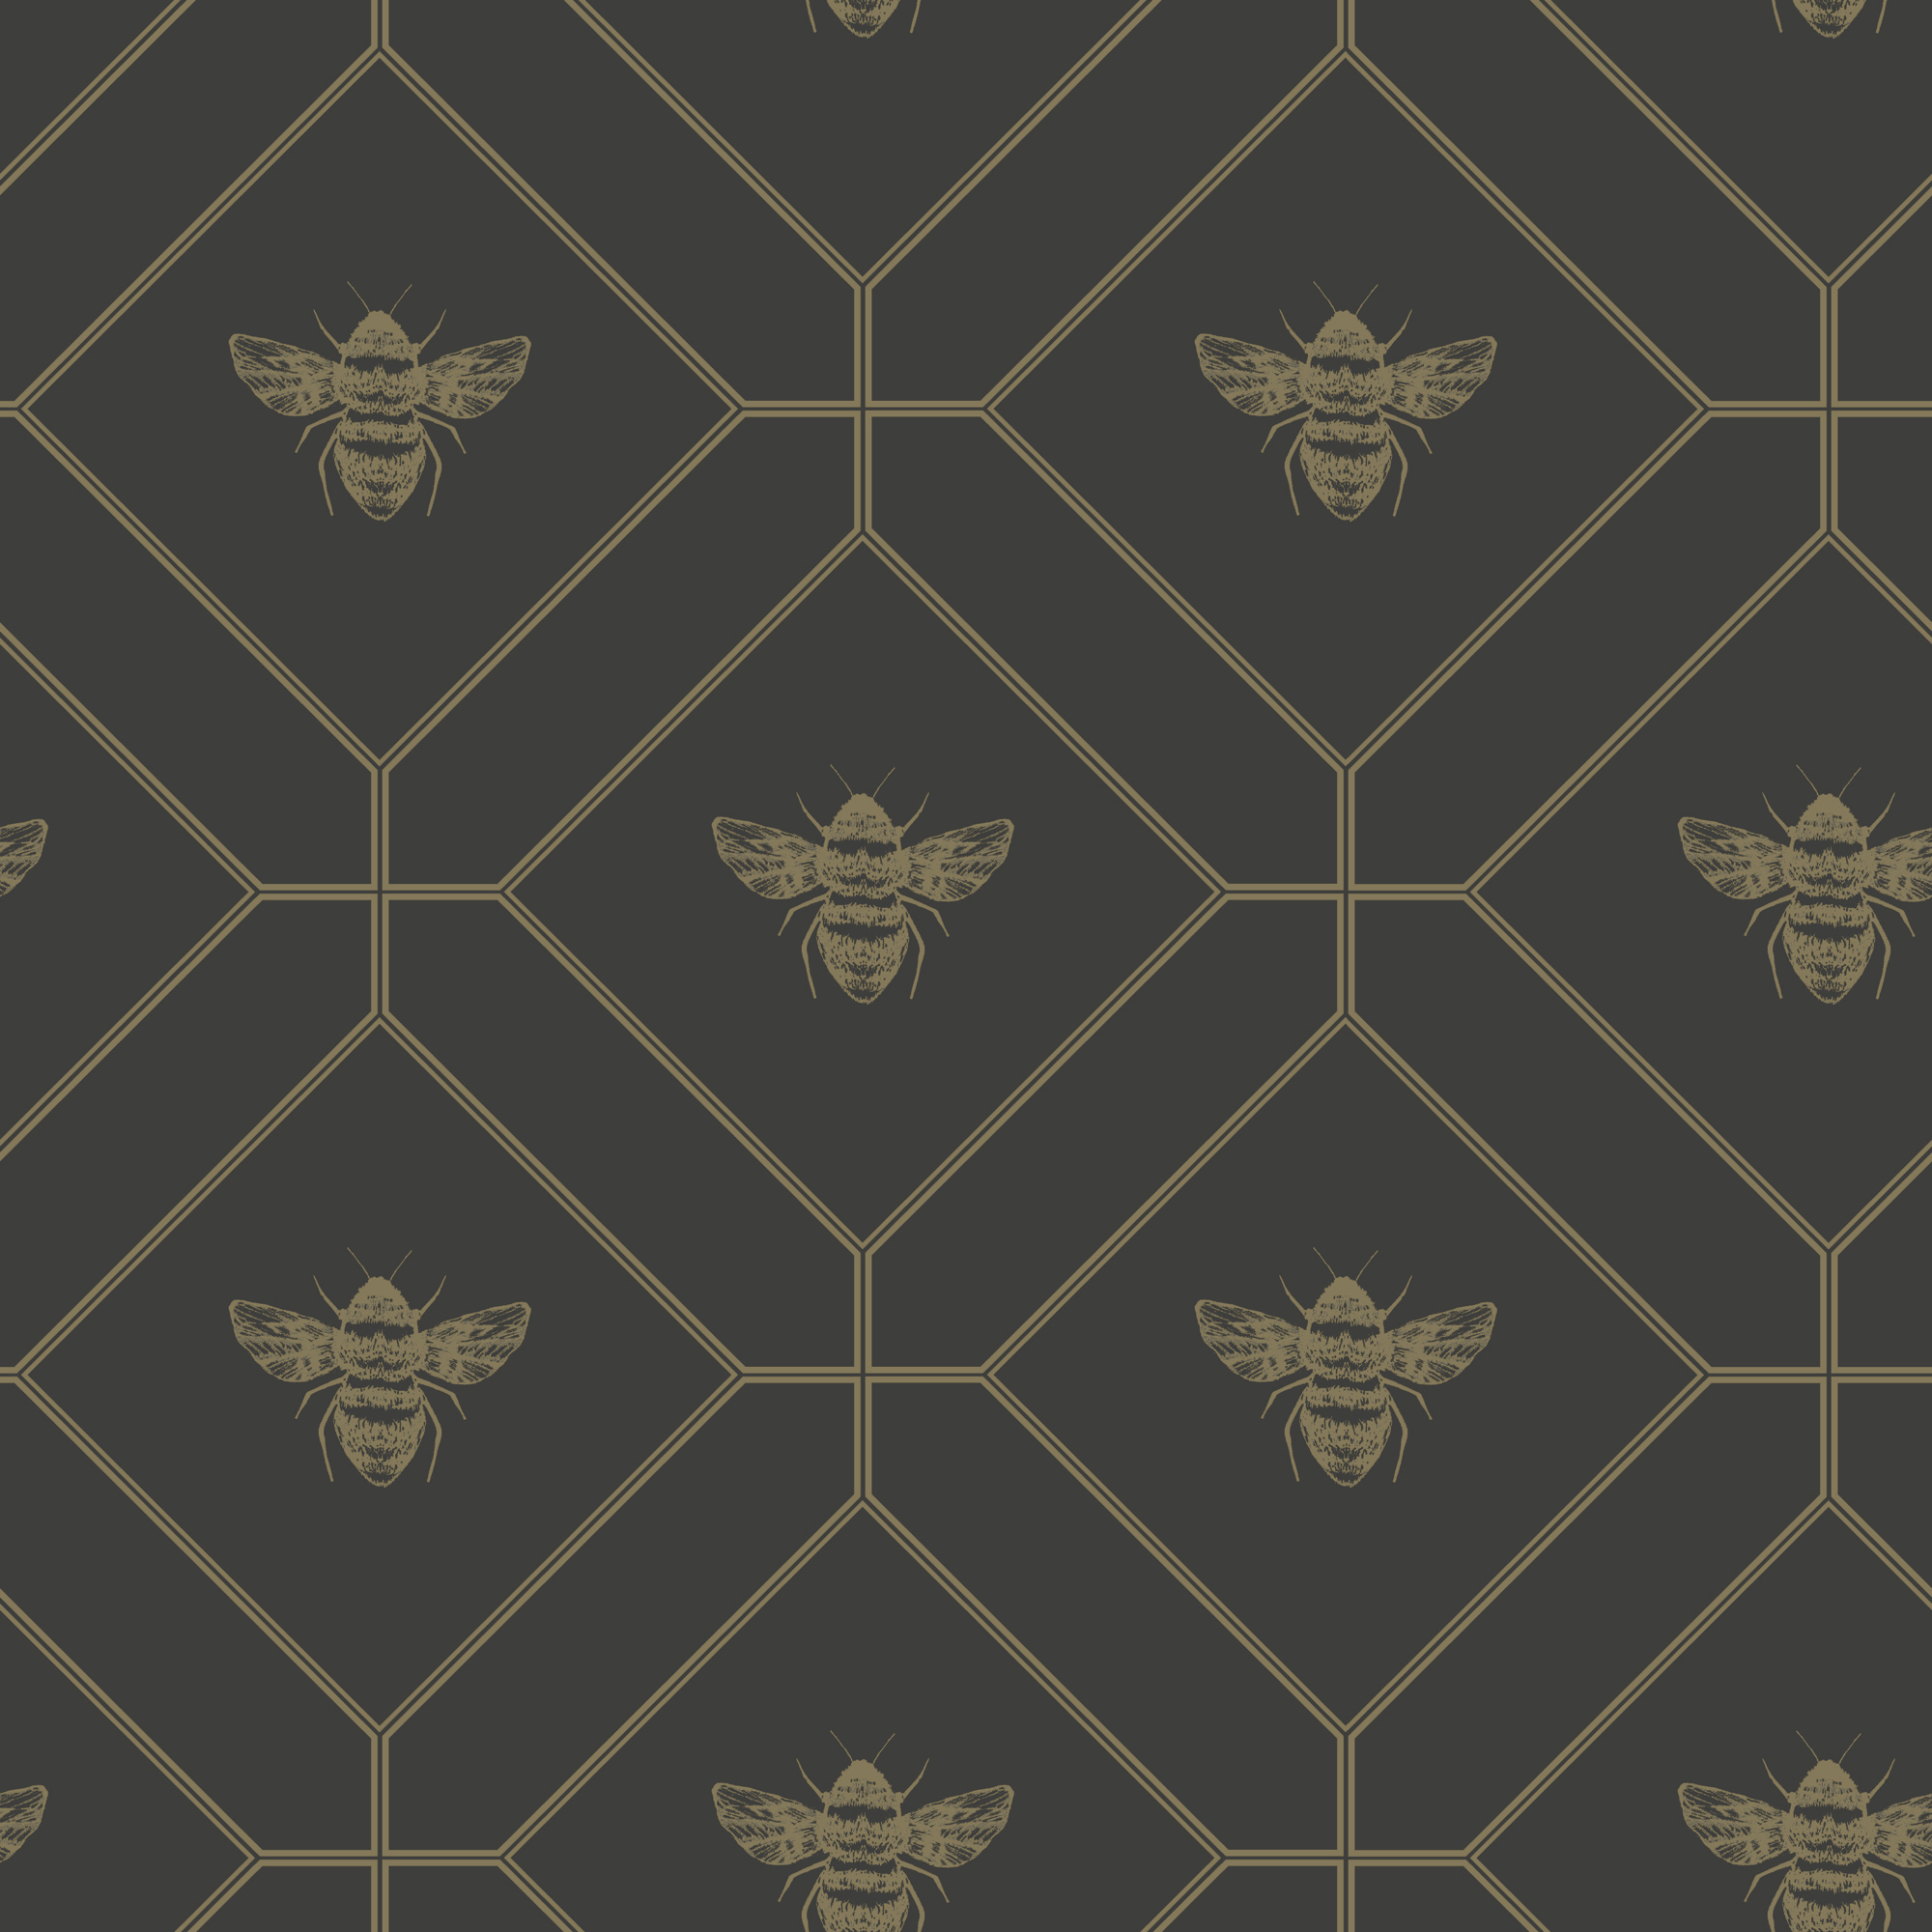 Holden Decor Honeycomb Bee Charcoal & Gold Wallpaper - 10.05m x 53cm